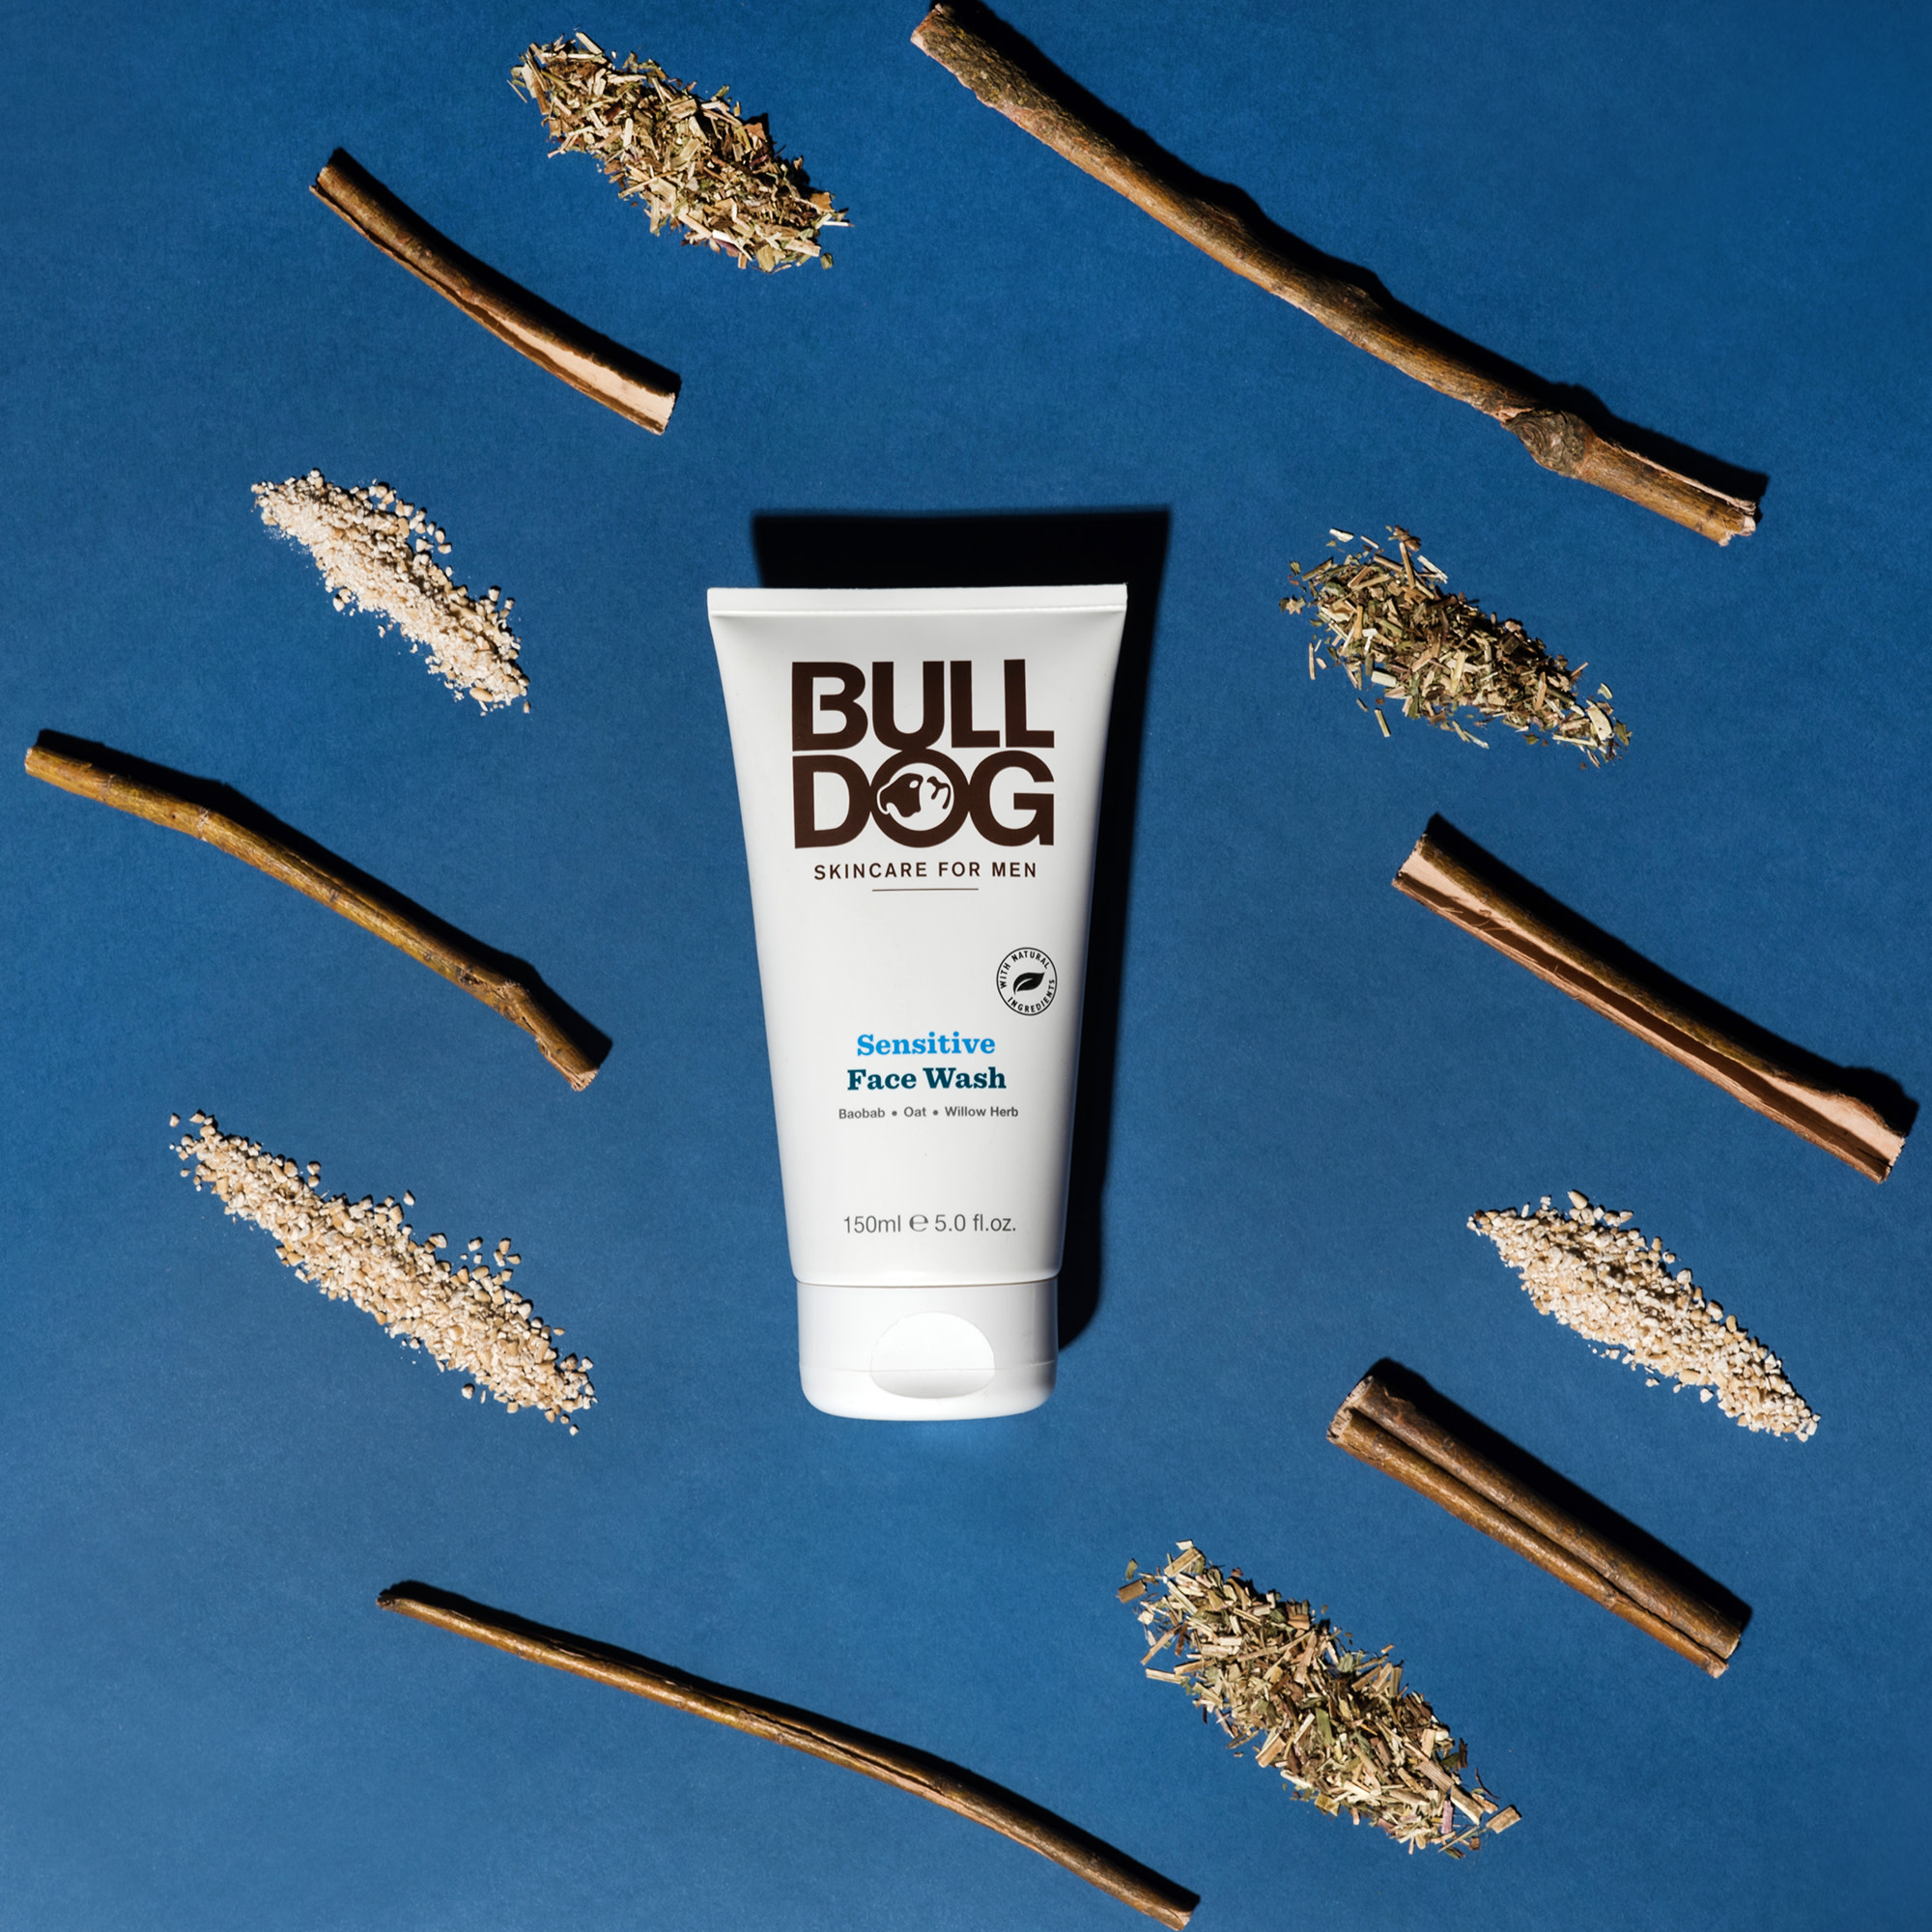 Bulldog Skincare for Men Sensitive Face Wash, 5 Oz - image 5 of 7